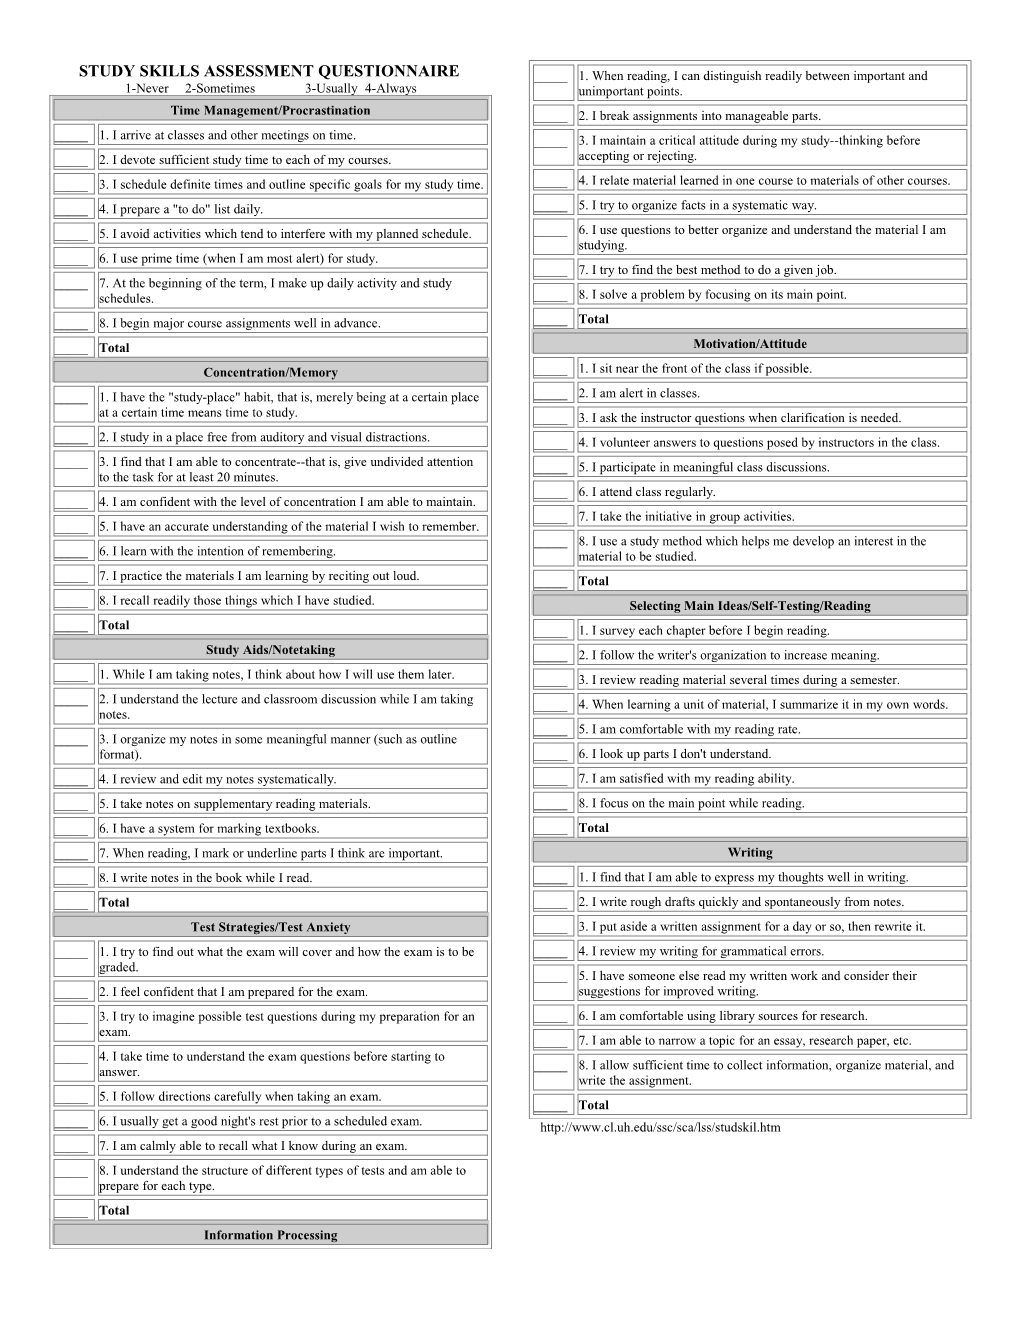 Study Skills Assessment Questionnaire